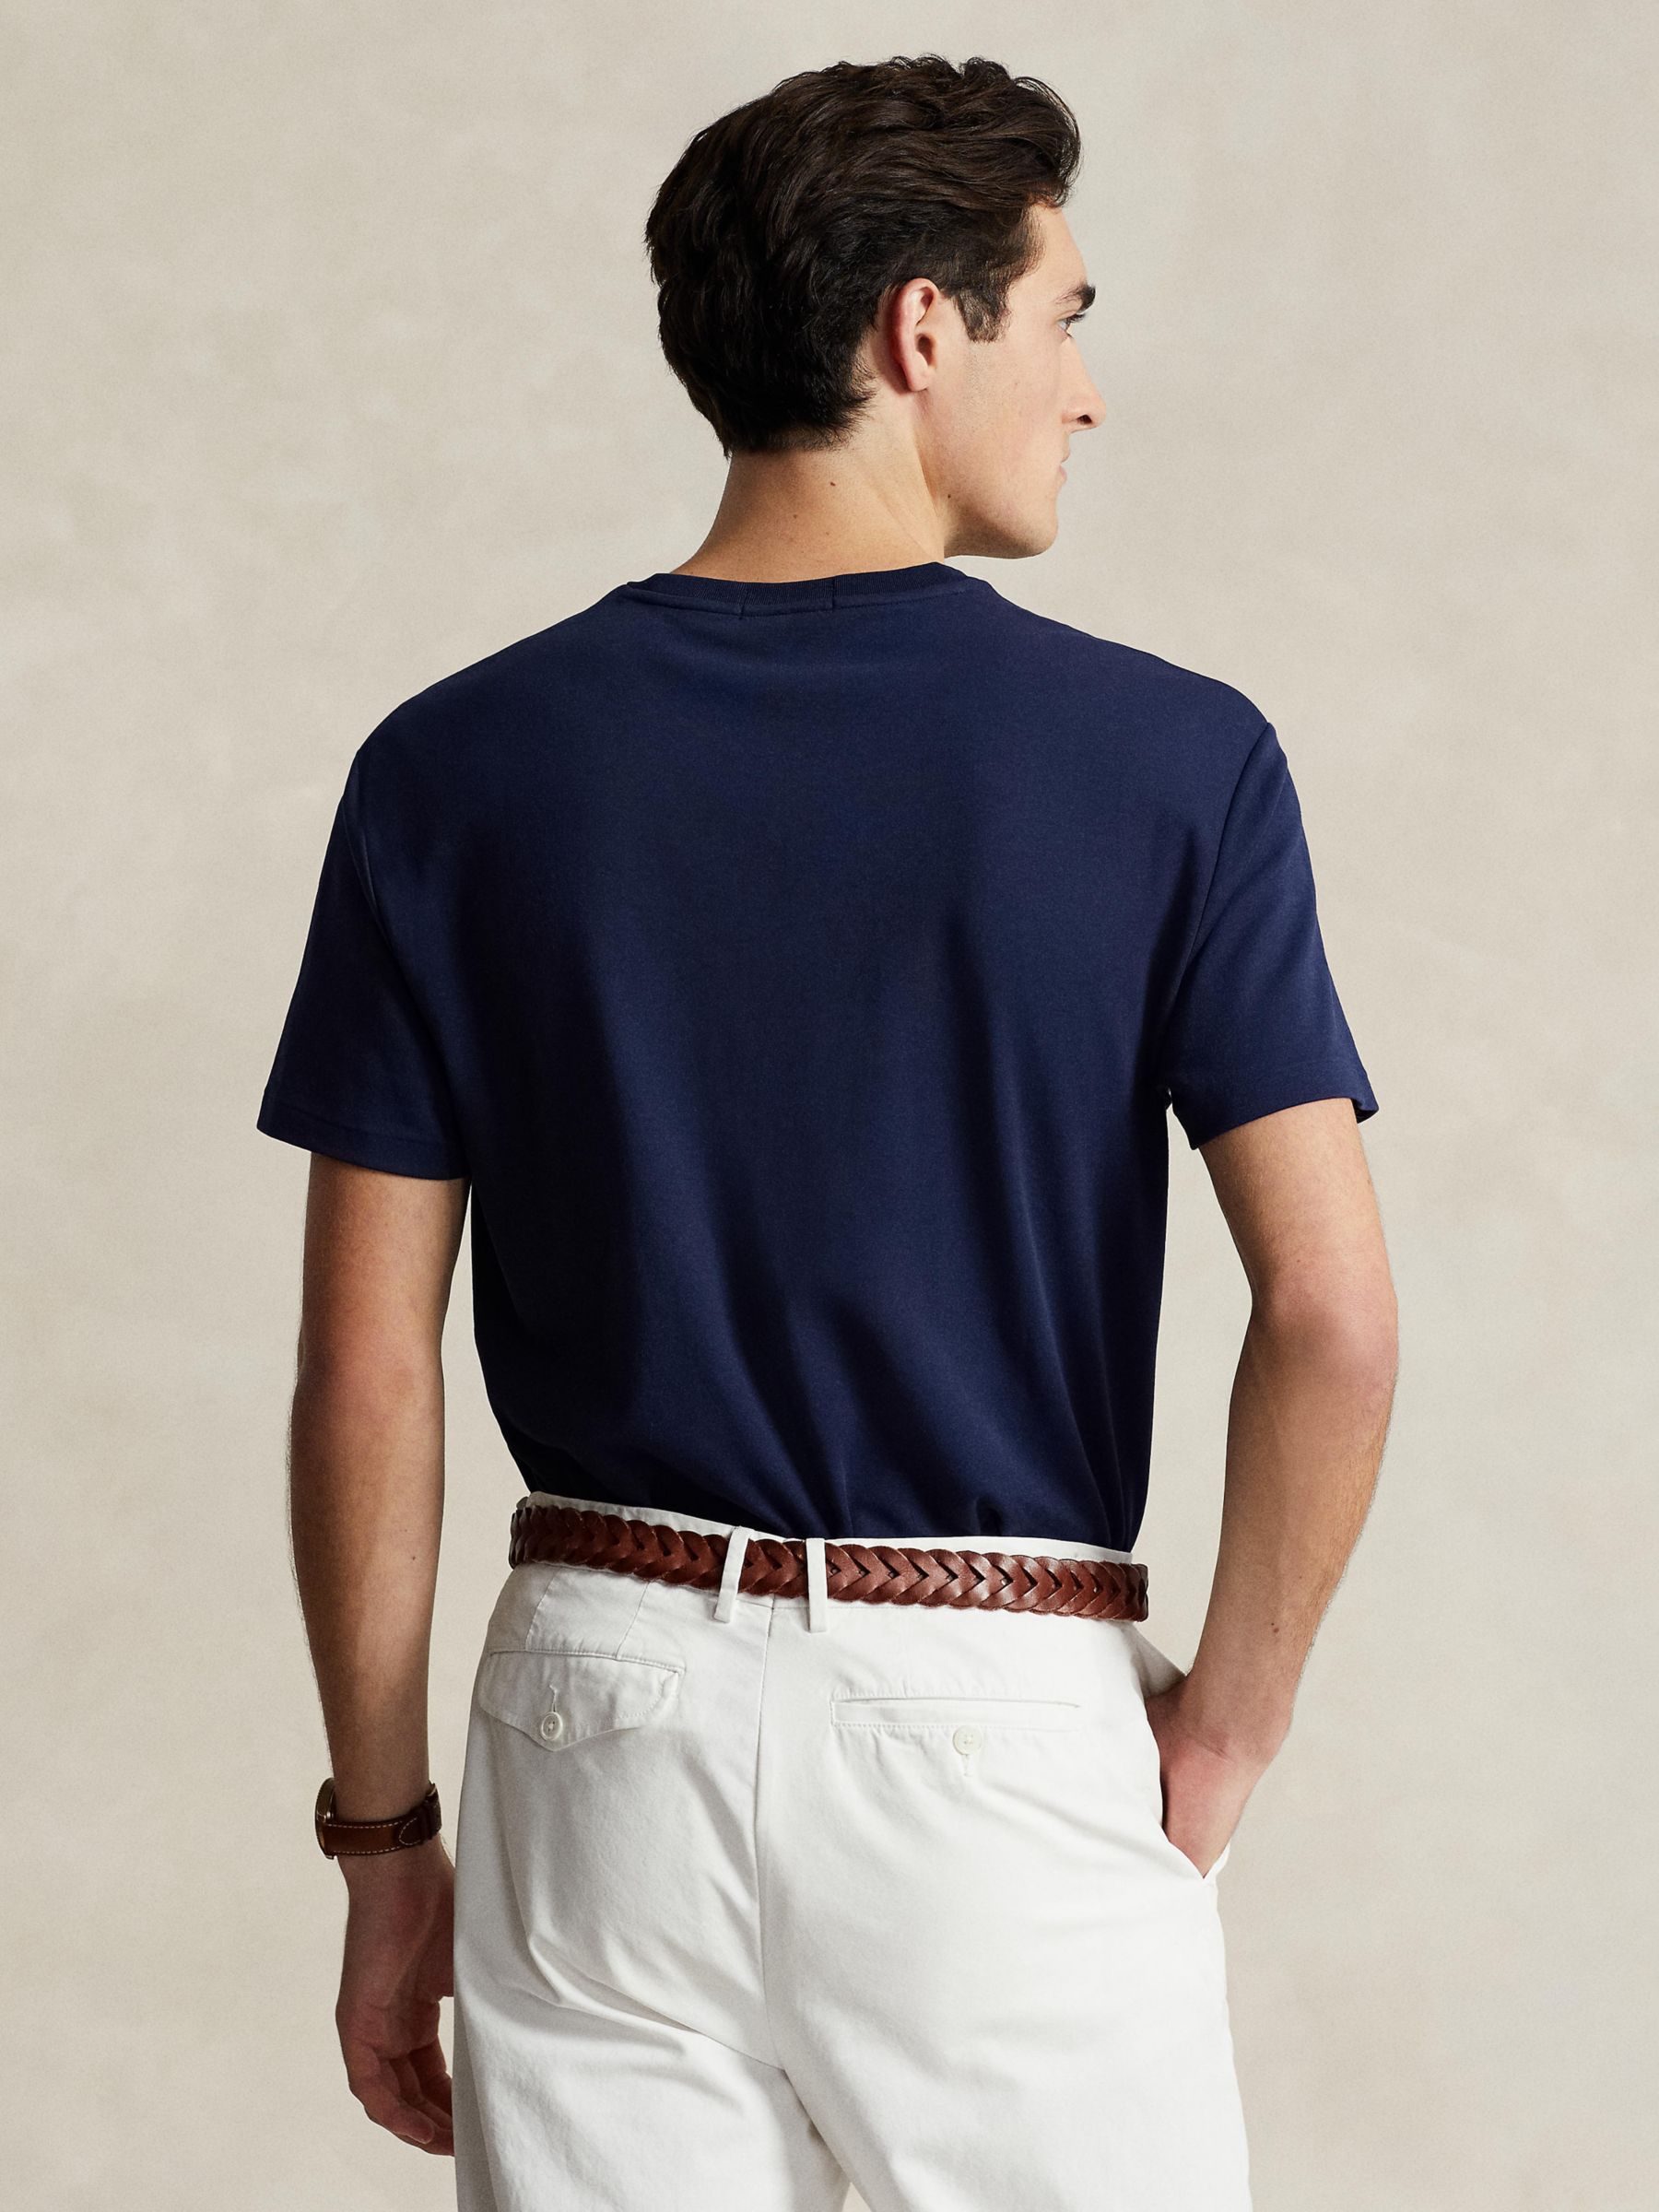 Polo Ralph Lauren Little Boys 2T-7 Short-Sleeve Essential V-Neck T-Shirt